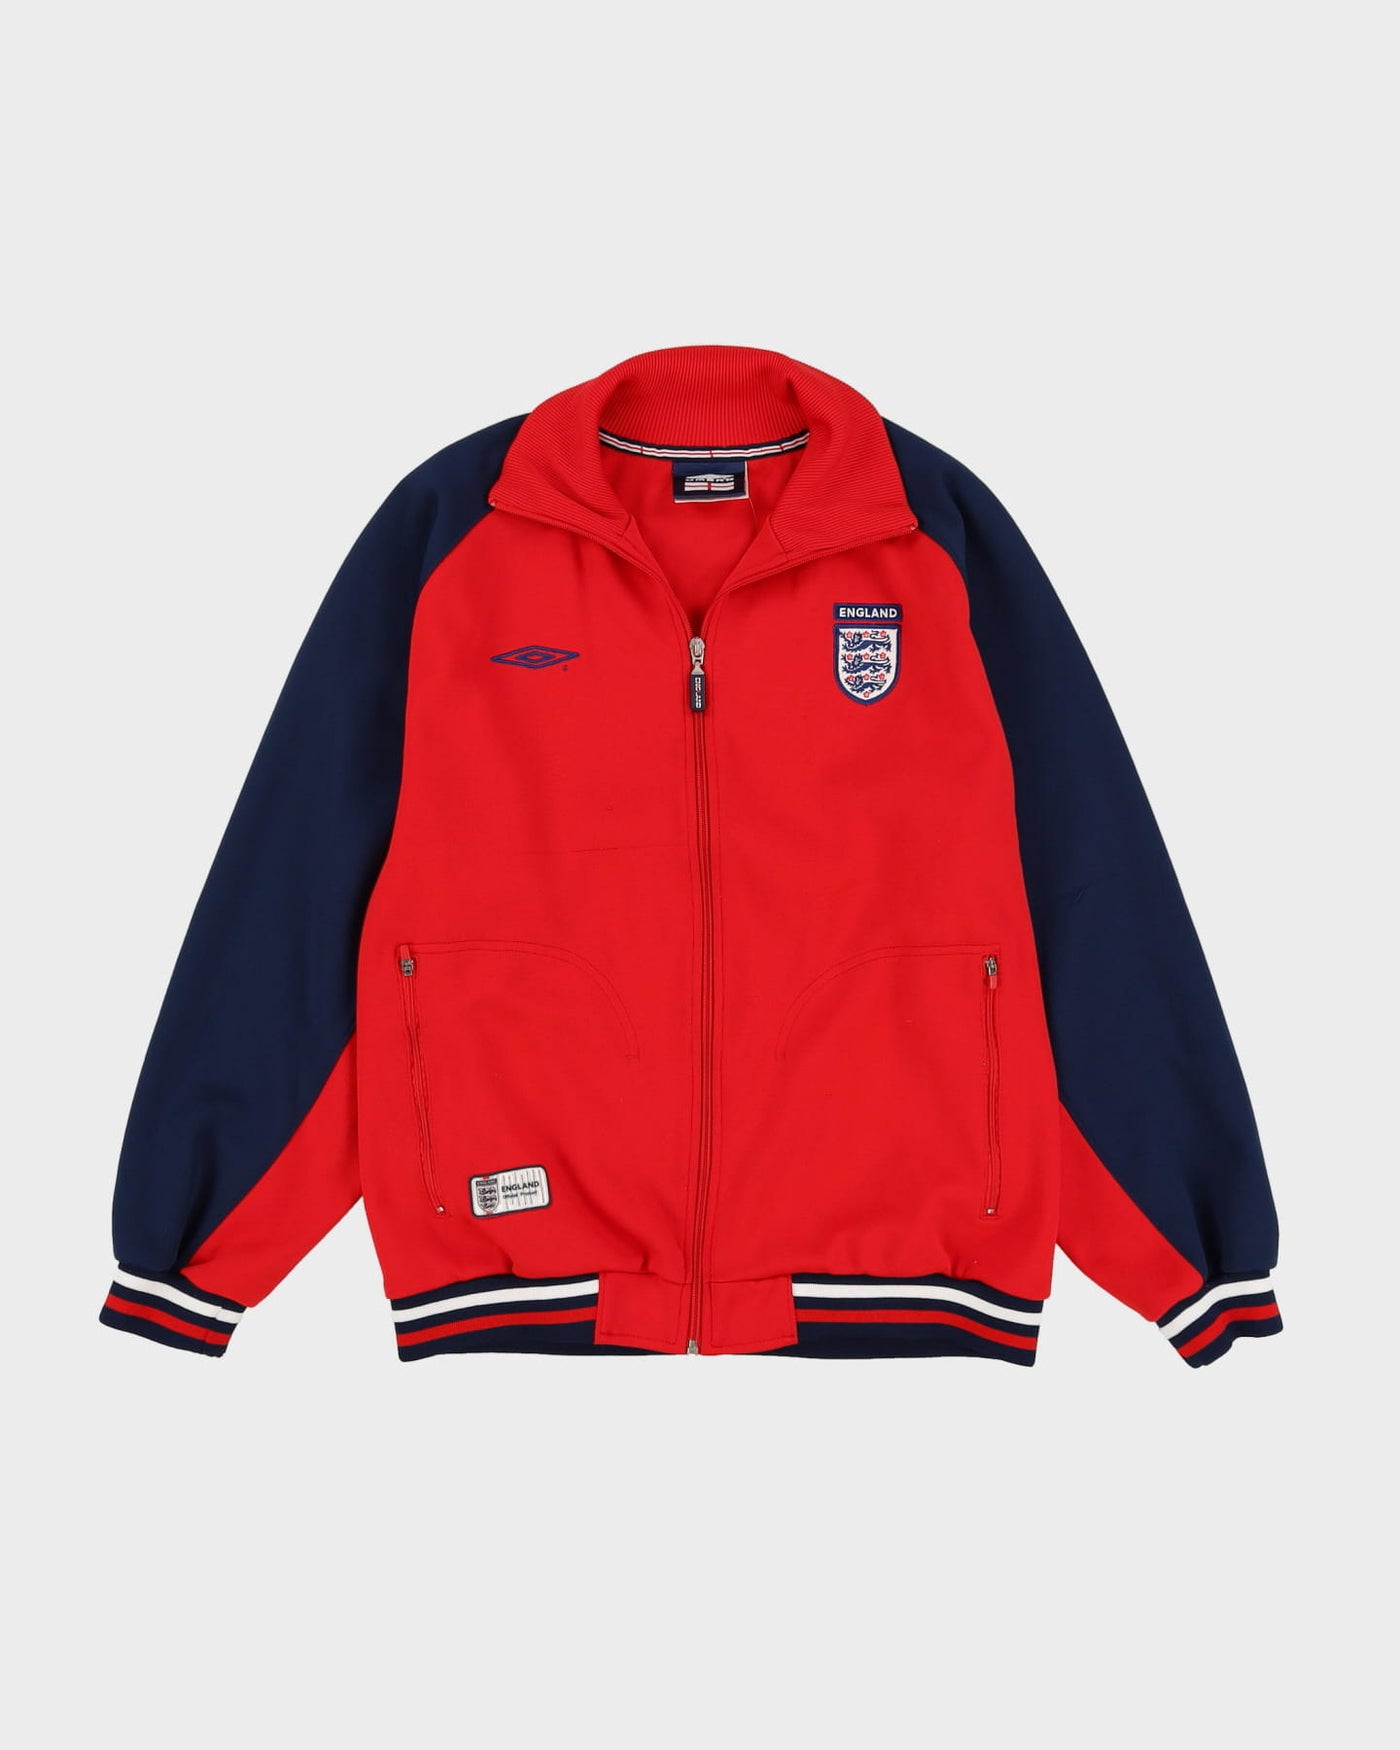 England Umbro Red / Navy Track Jacket - M